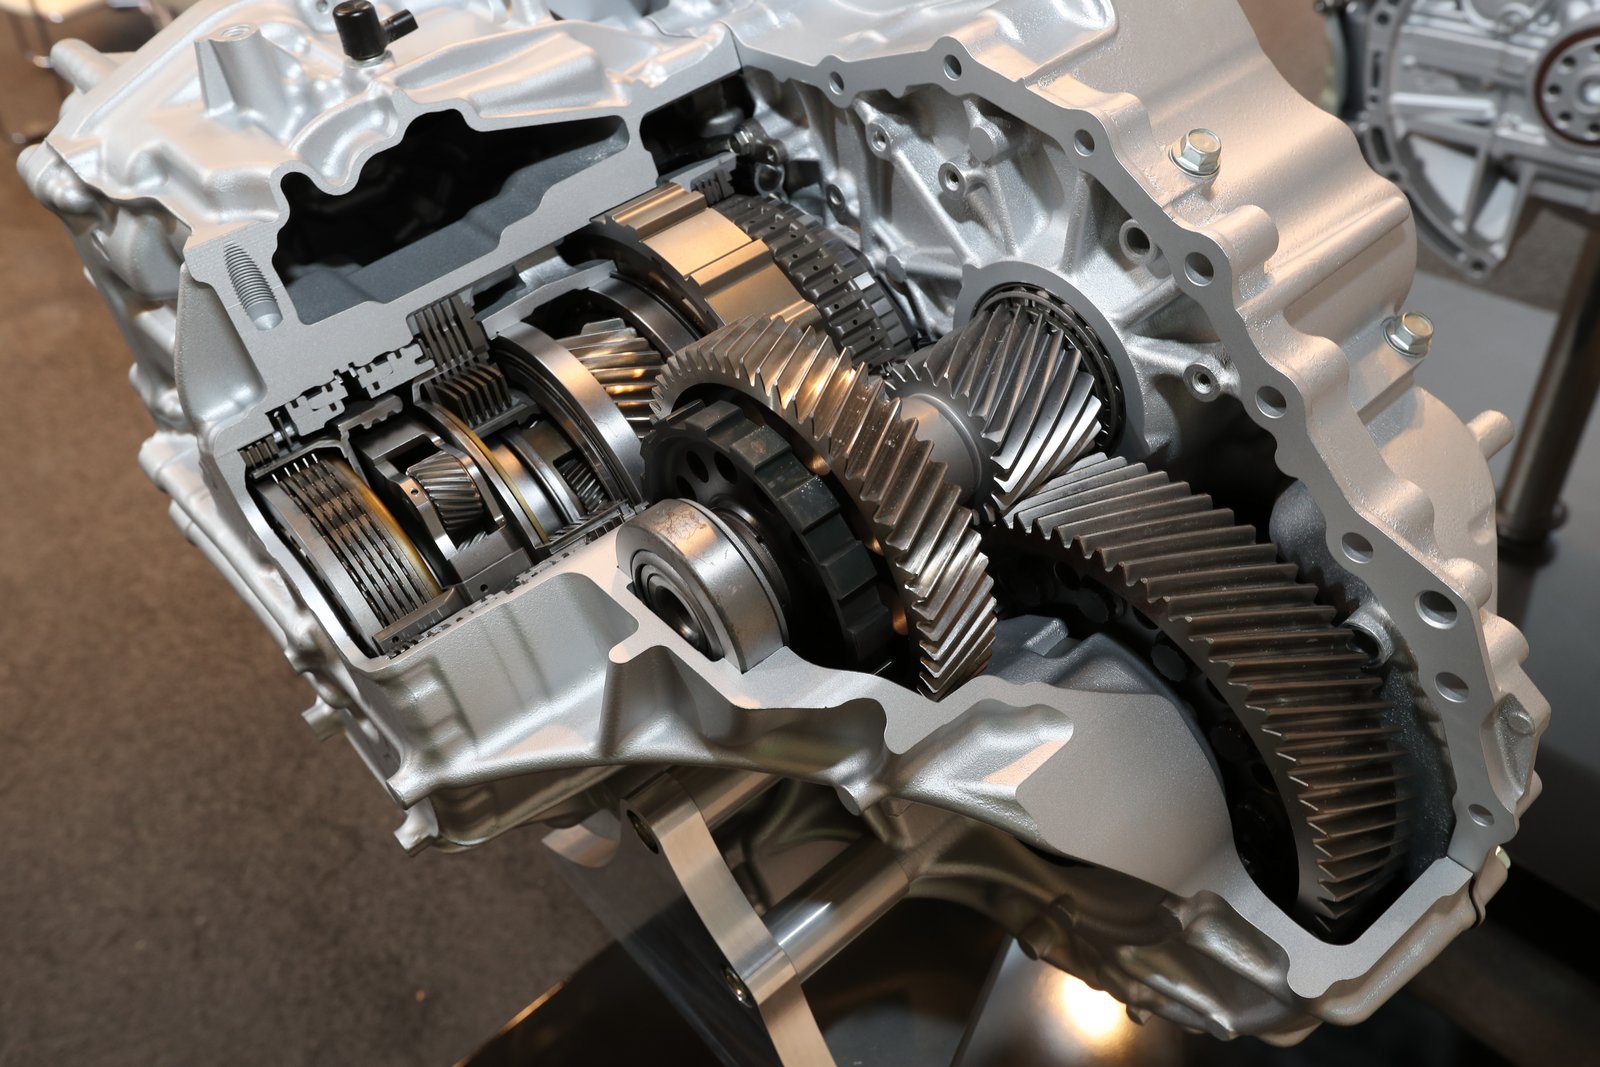 2018 Honda Accord Getting 1.5L and 2.0L Turbo Engines, 10 ...